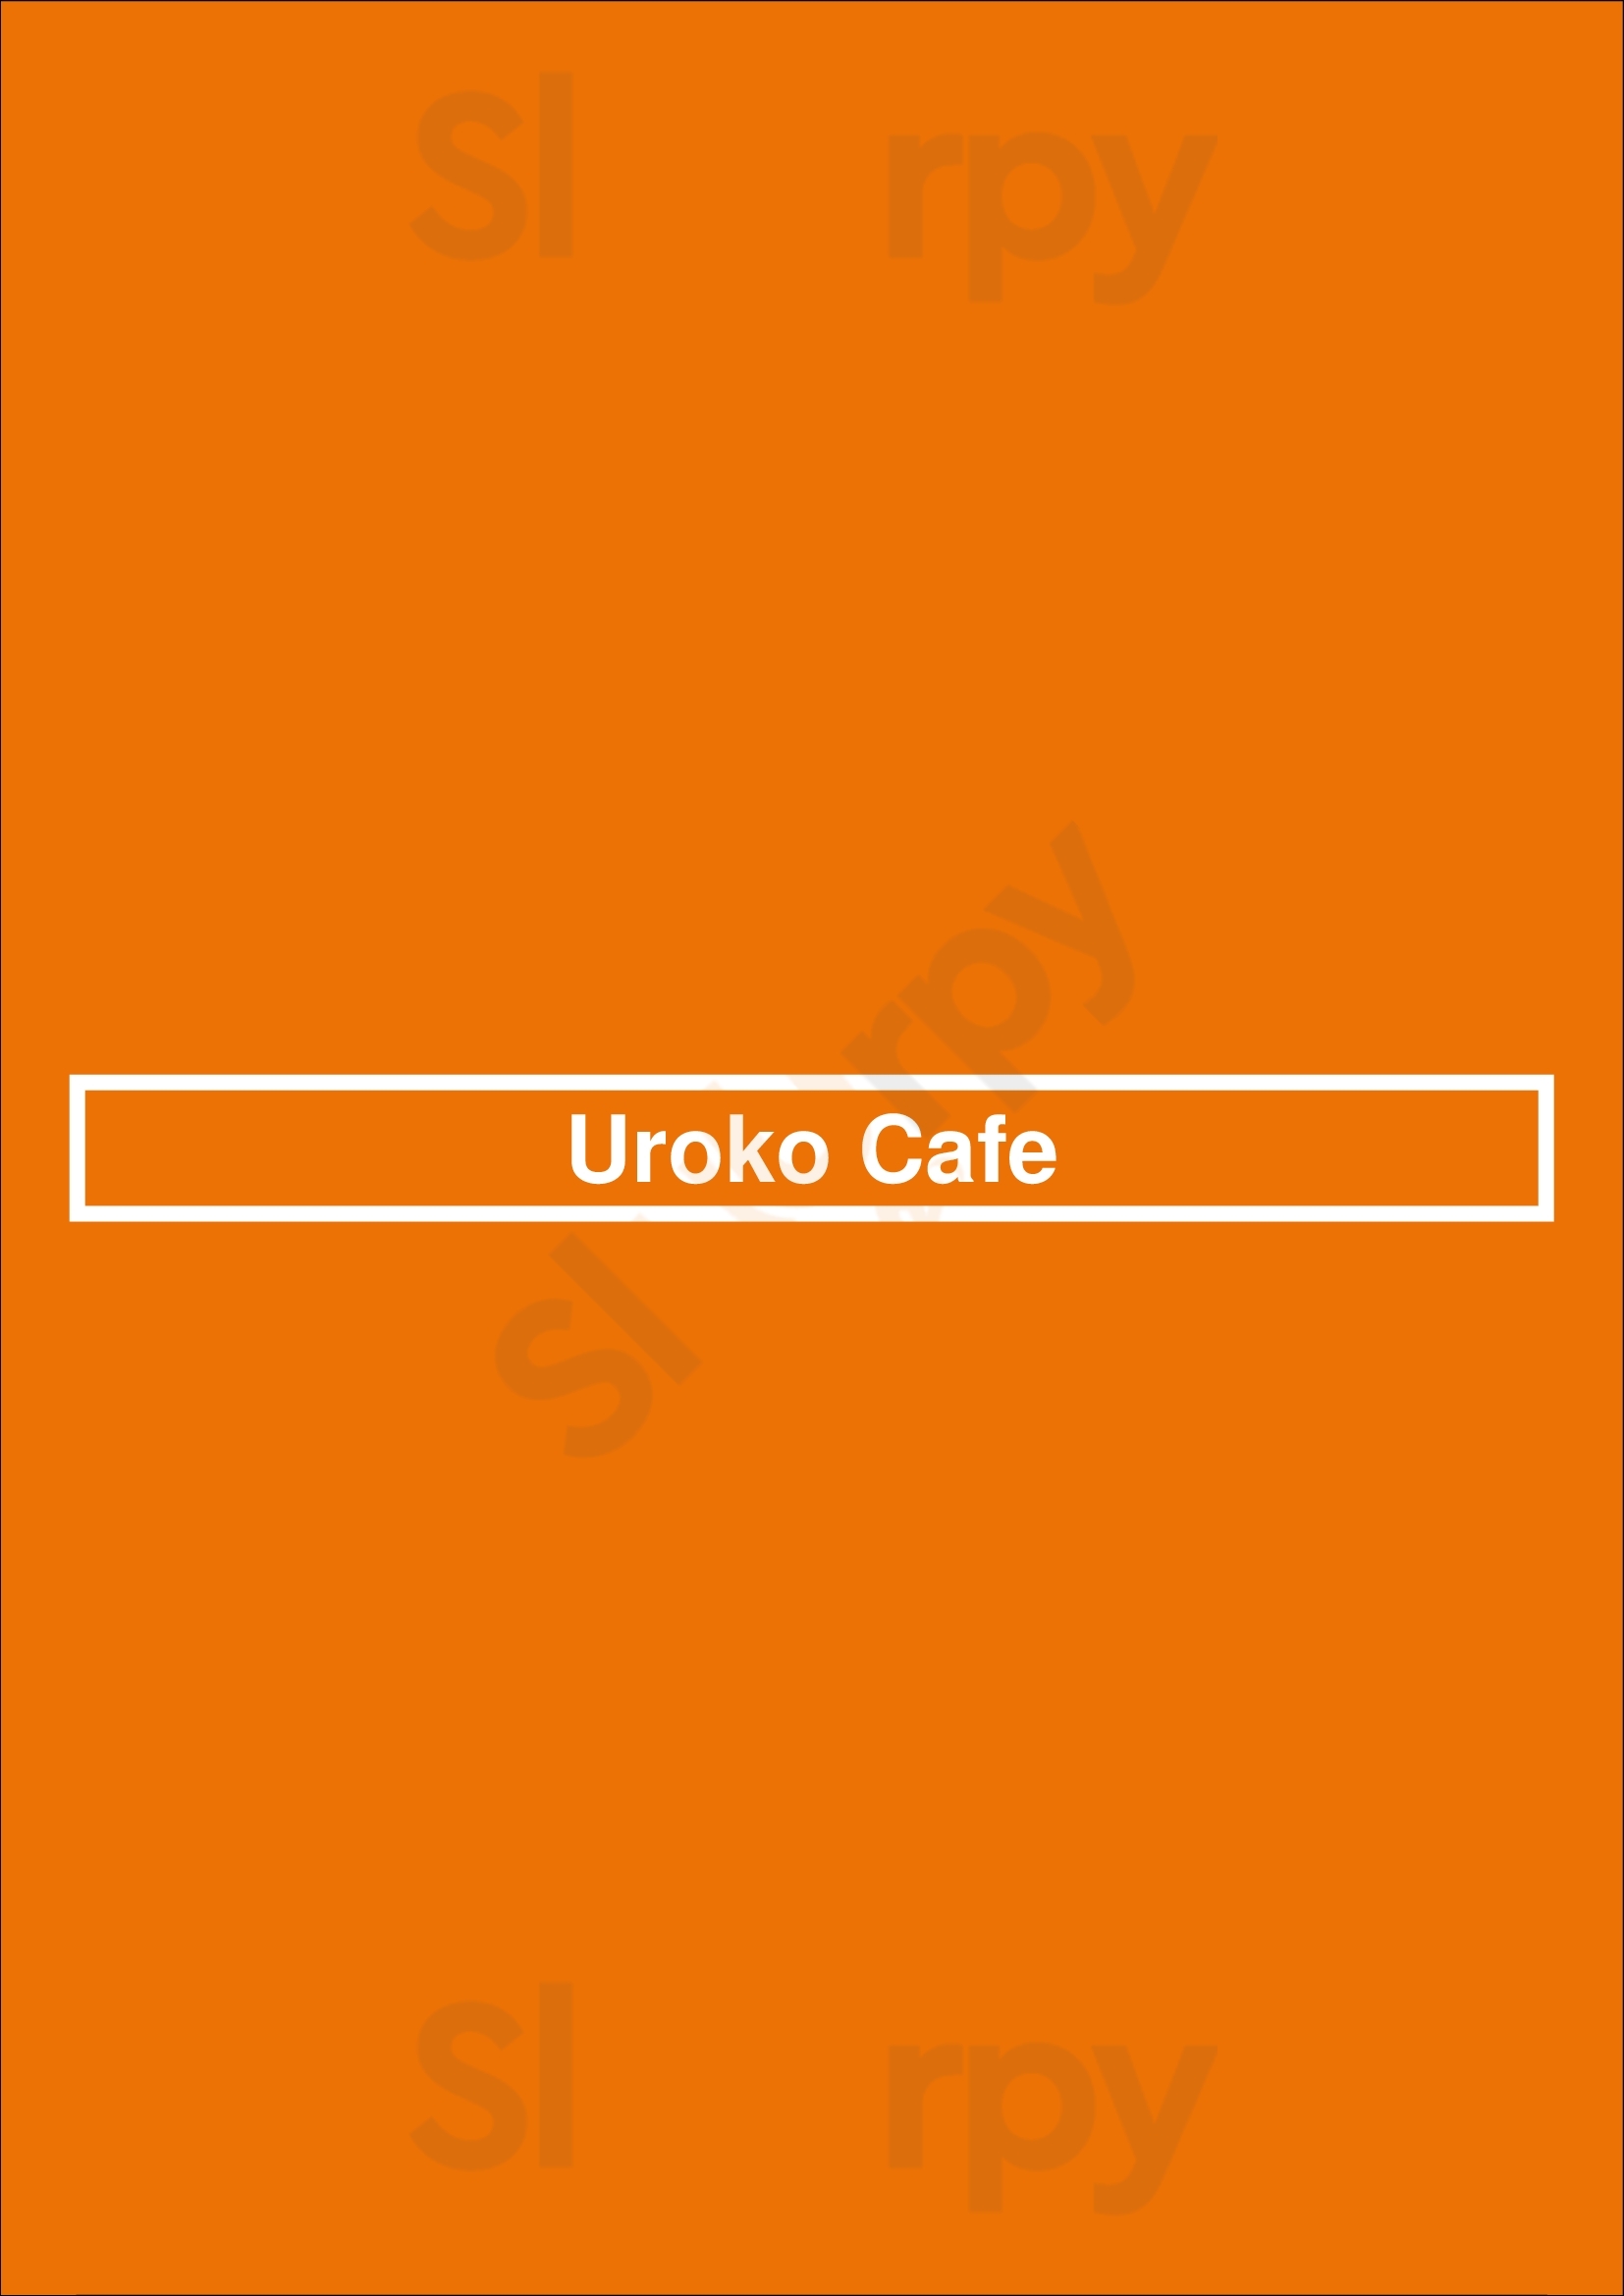 Uroko Cafe Cypress Menu - 1